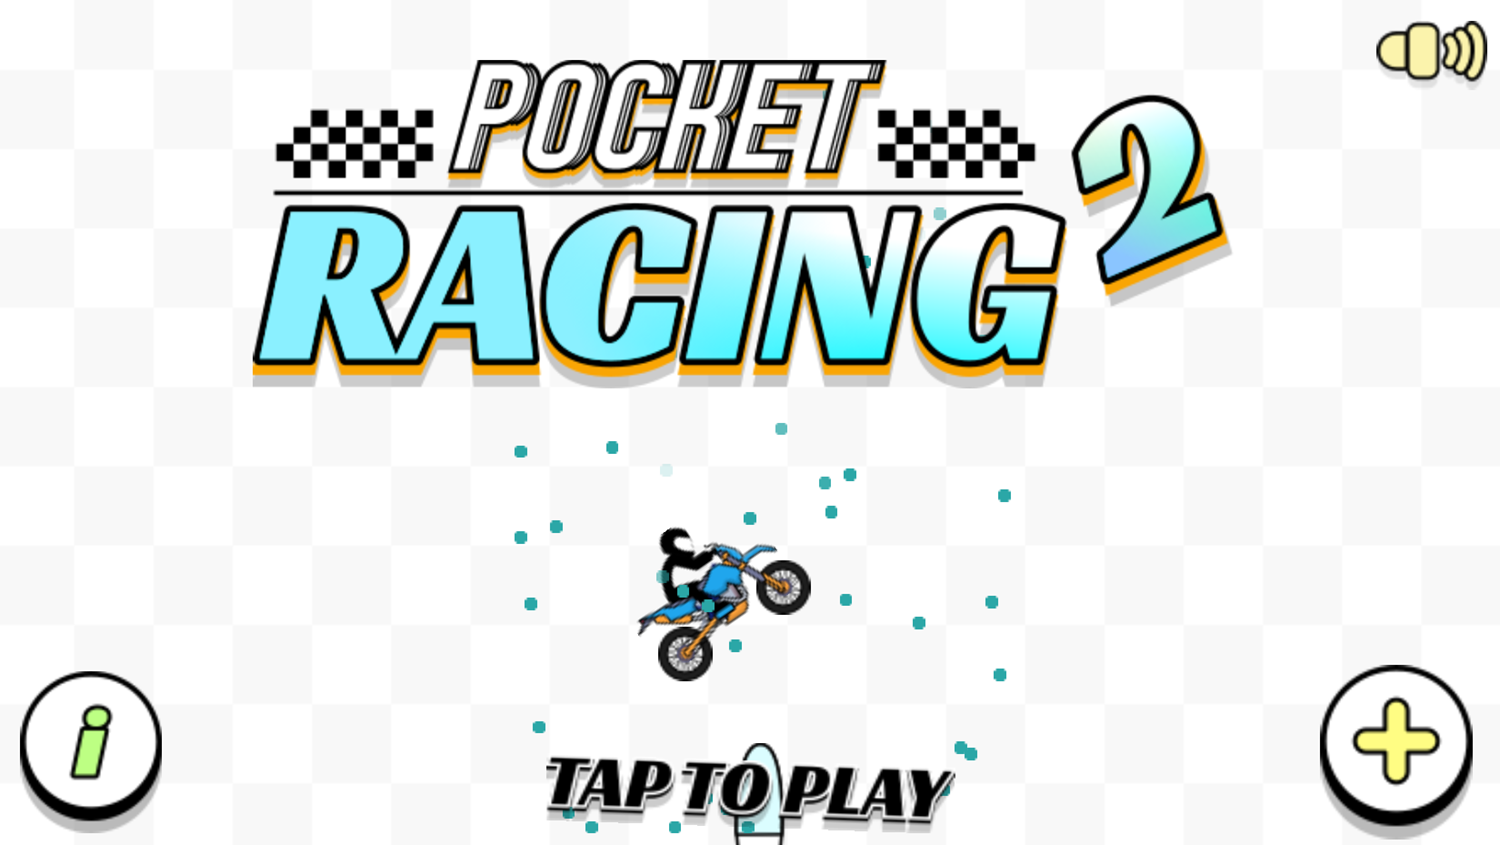 Pocket Racing 2 Game Welcome Screen Screenshot.